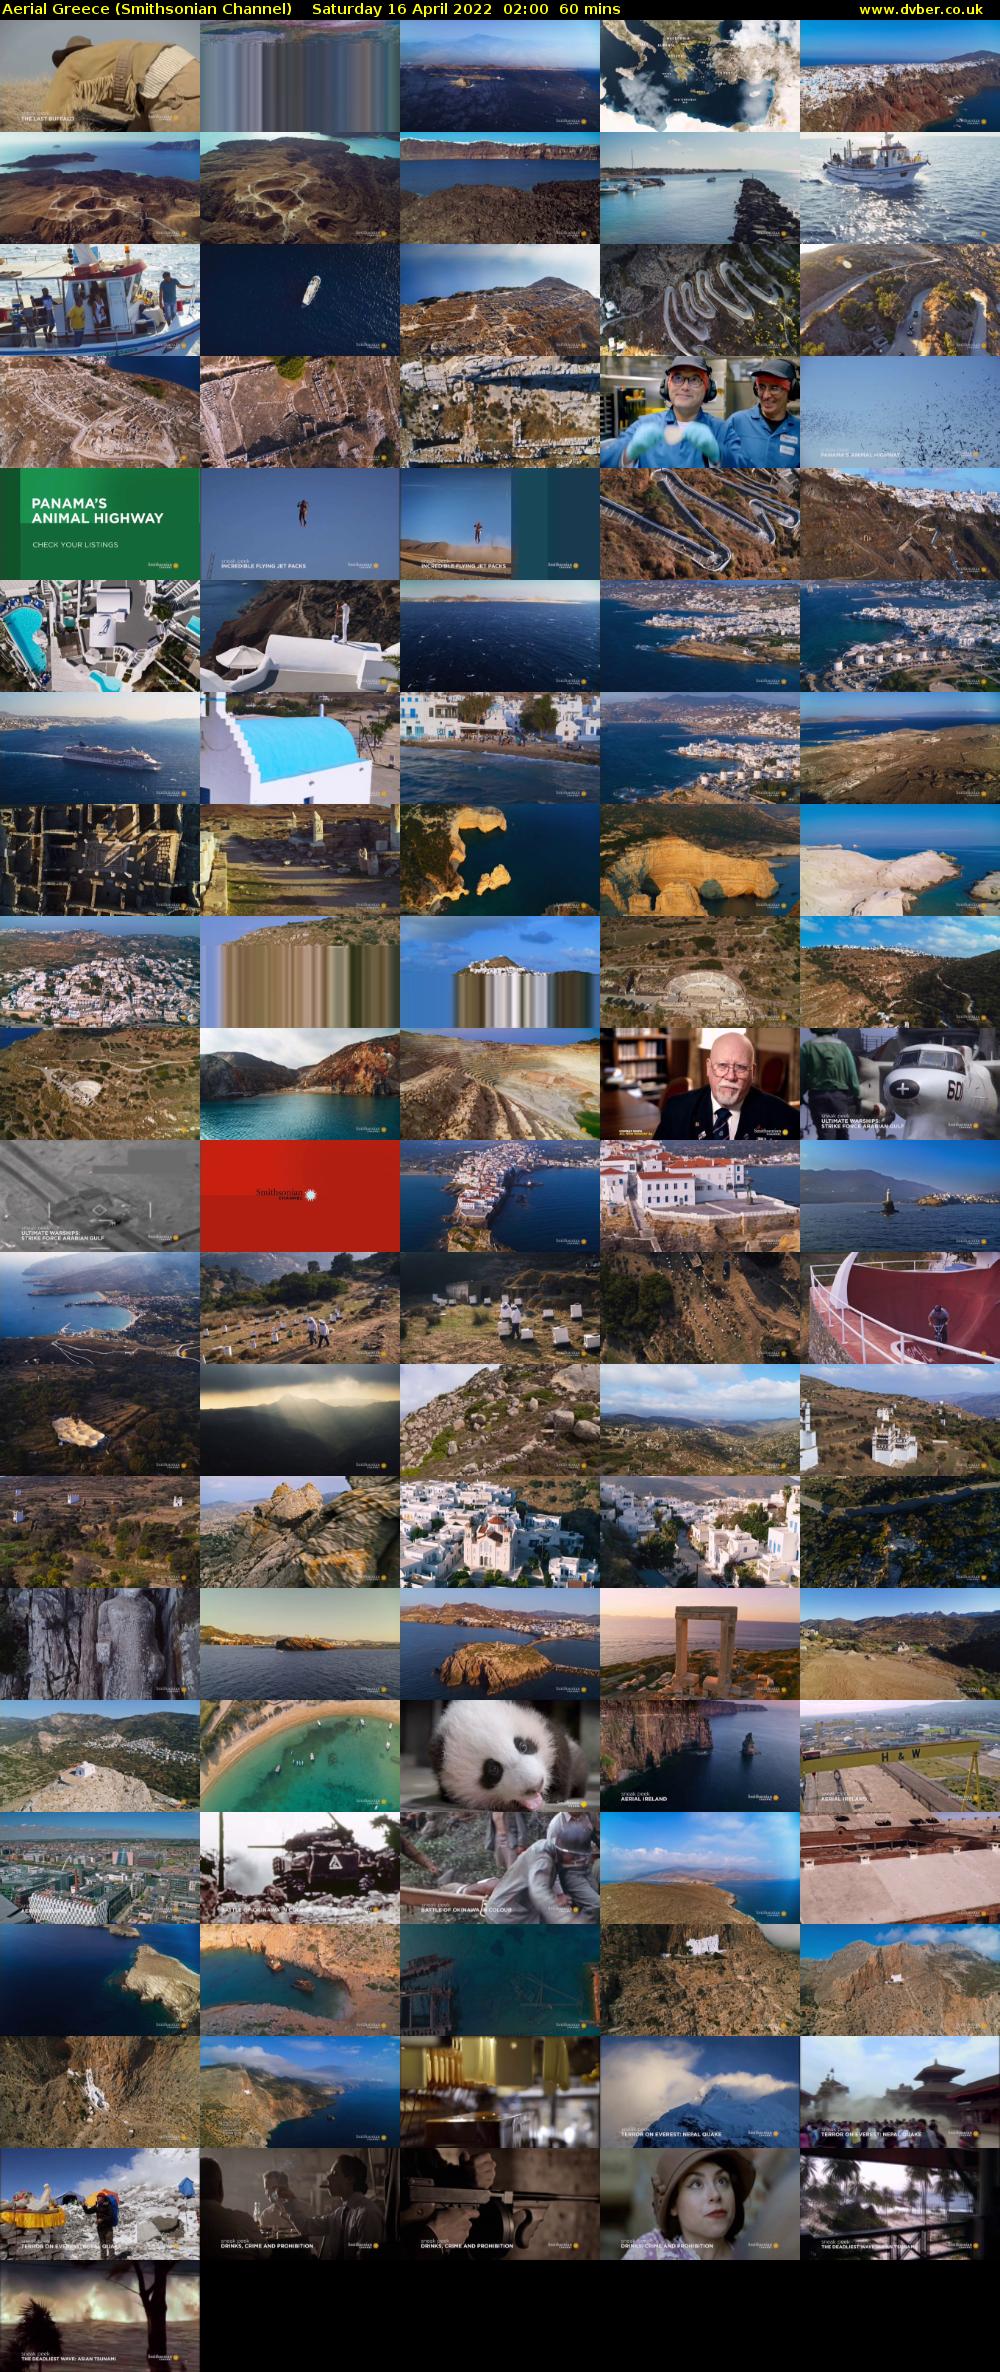 Aerial Greece (Smithsonian Channel) Saturday 16 April 2022 02:00 - 03:00